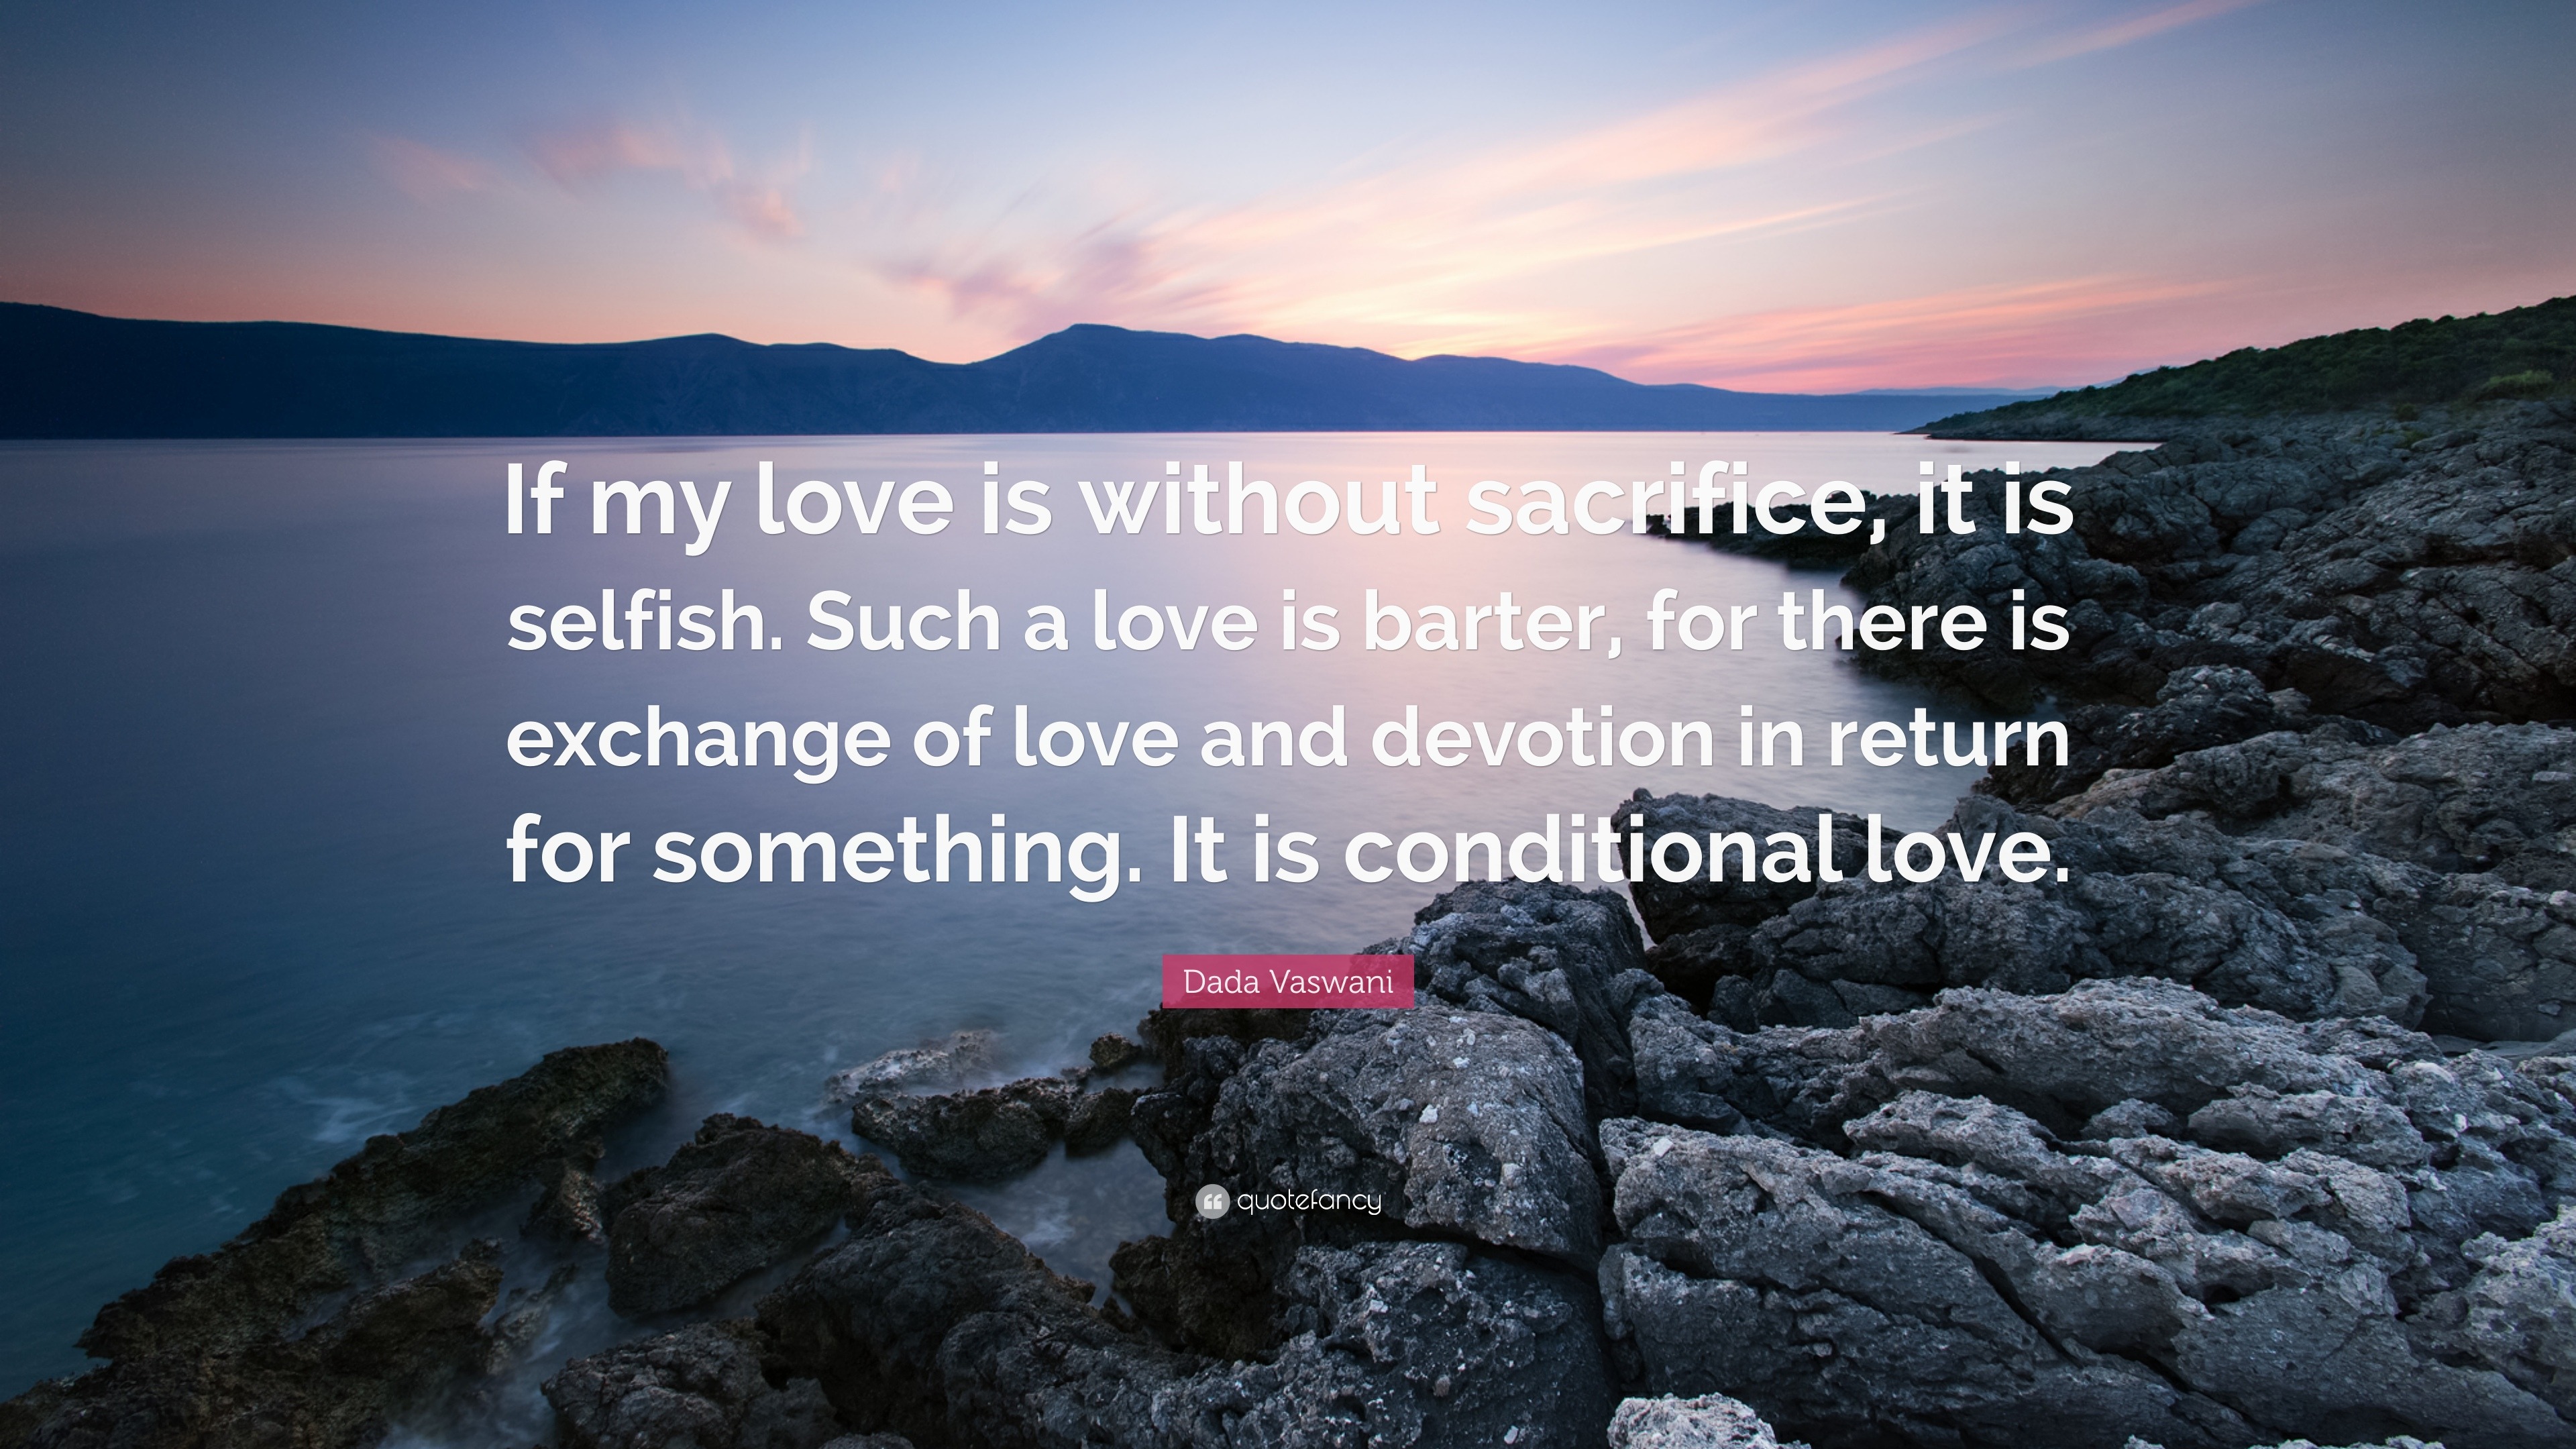 Dada Vaswani Quote: “If my love is without sacrifice, it is selfish ...